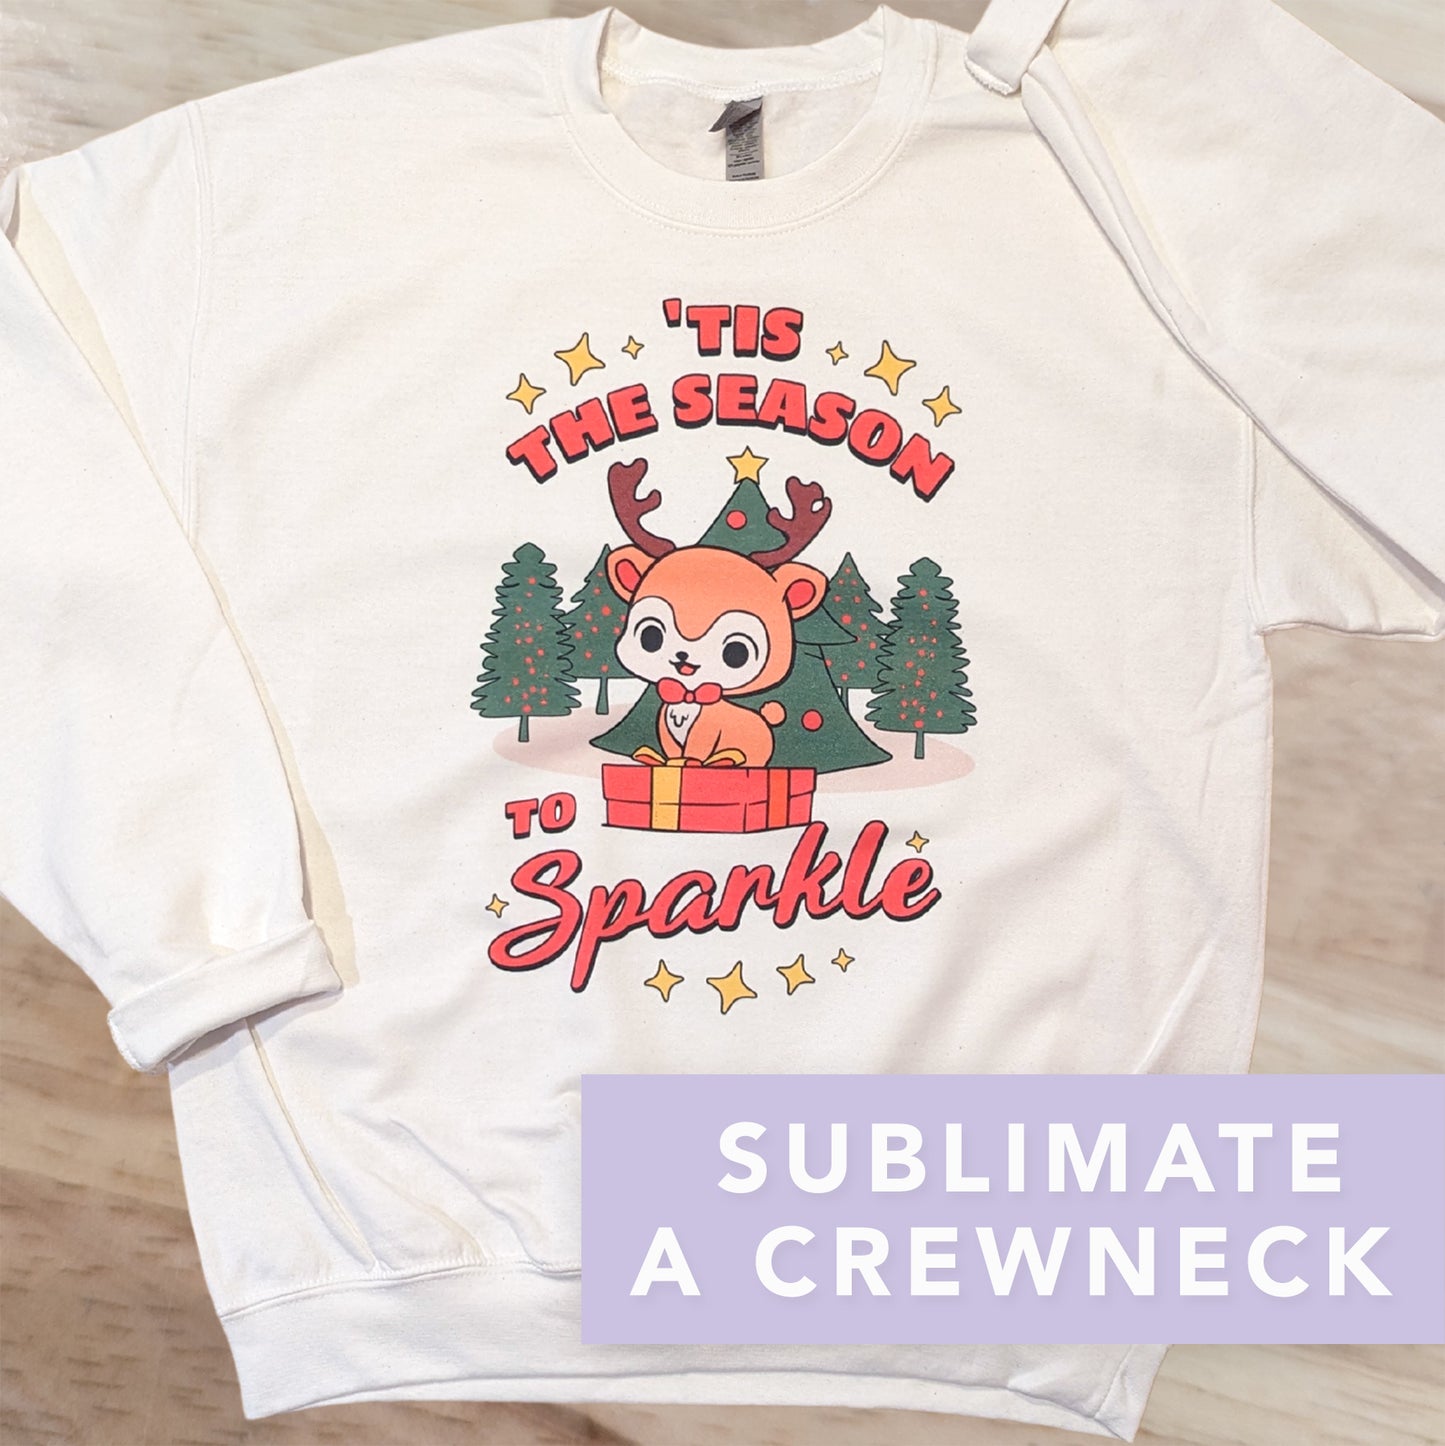 Make A Custom Sublimation Crewneck Sweatshirt (Pick Your Date/Time) Class - Sublimation Print Design & Transferring